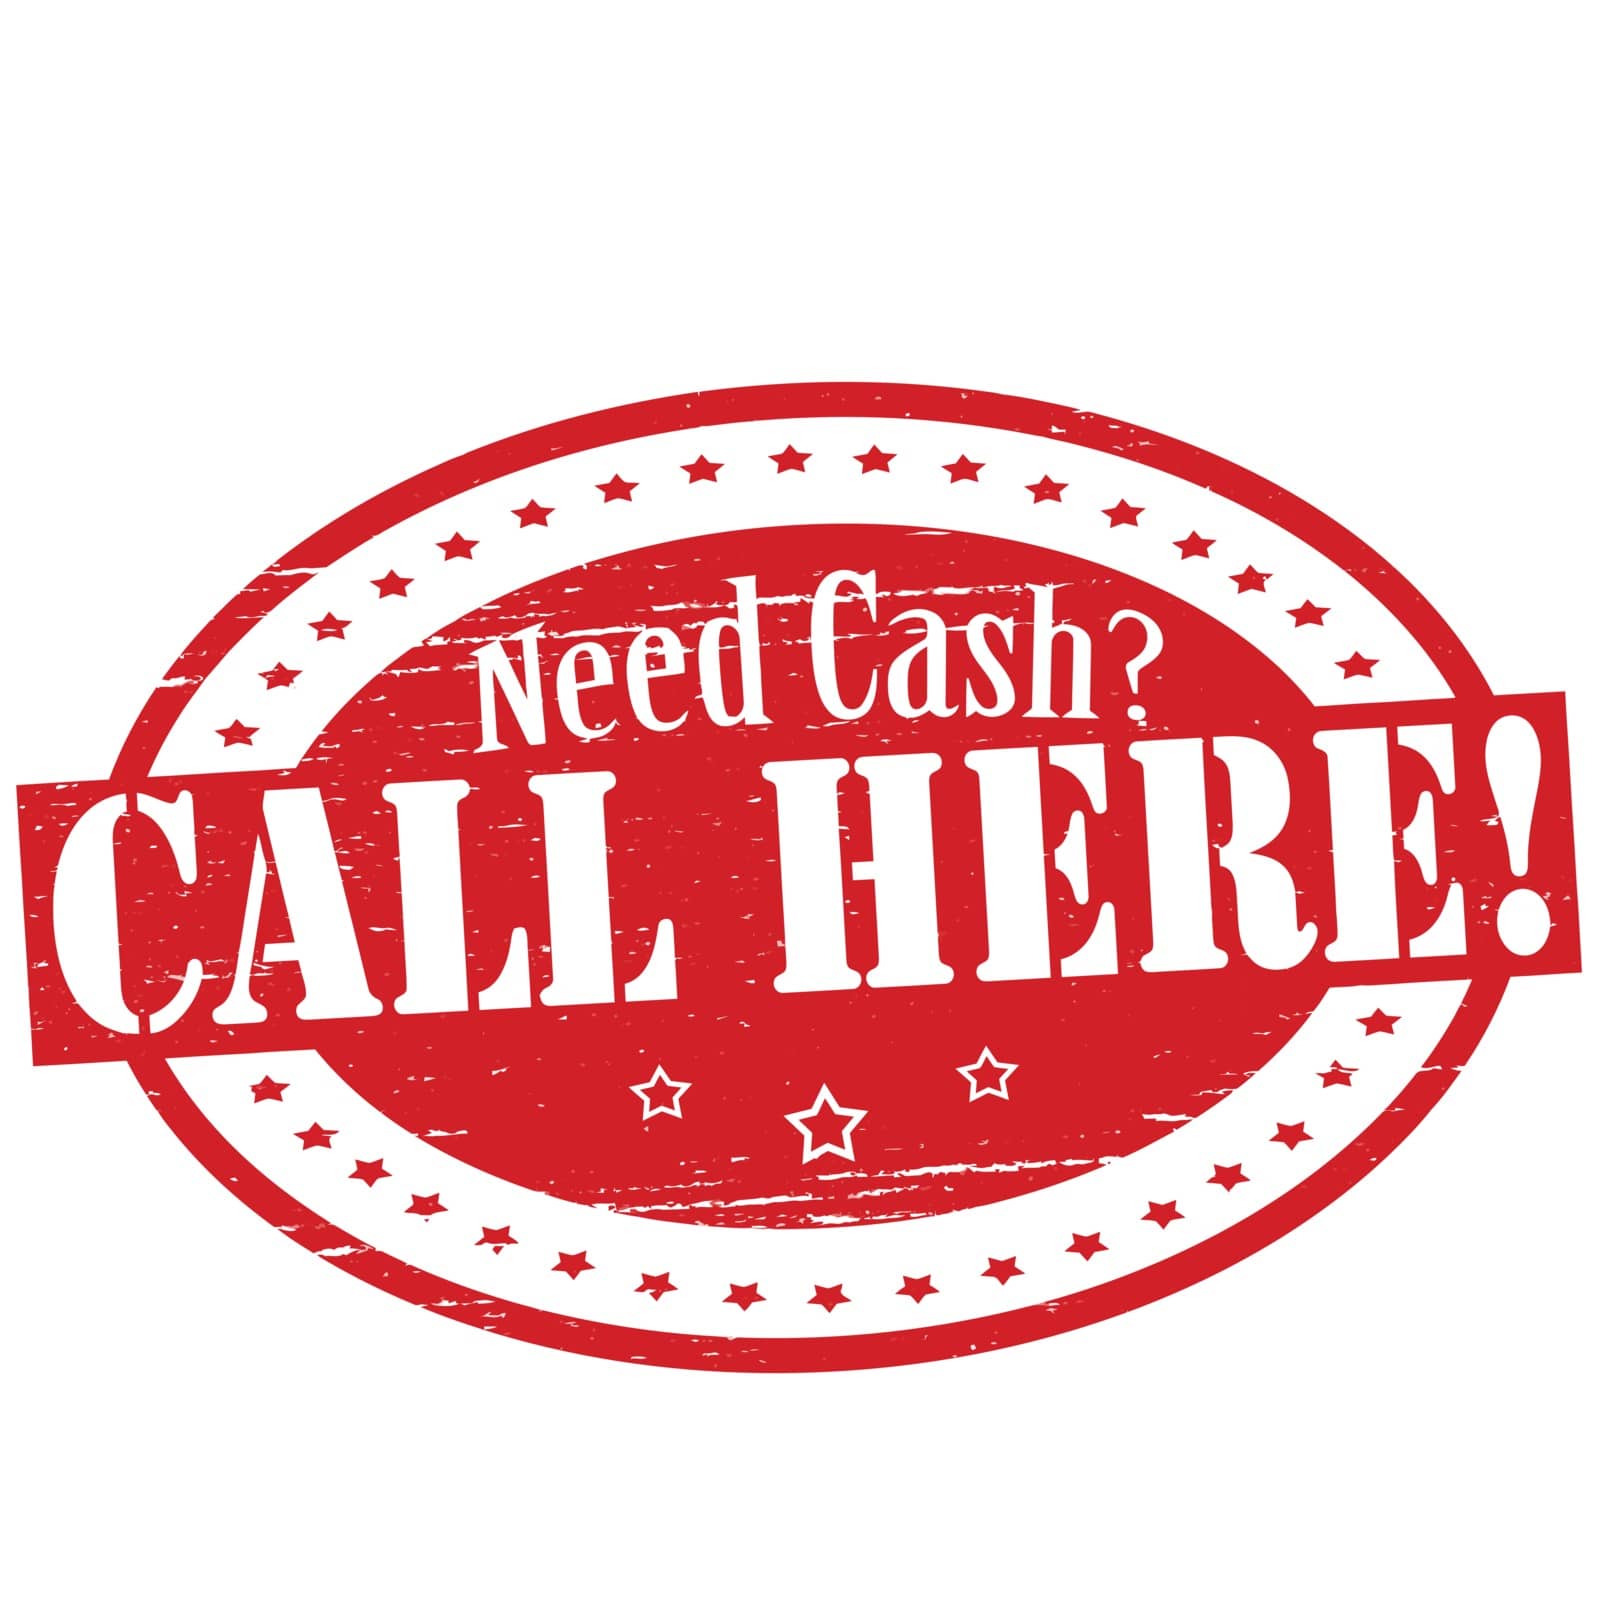 Need cash call here by carmenbobo